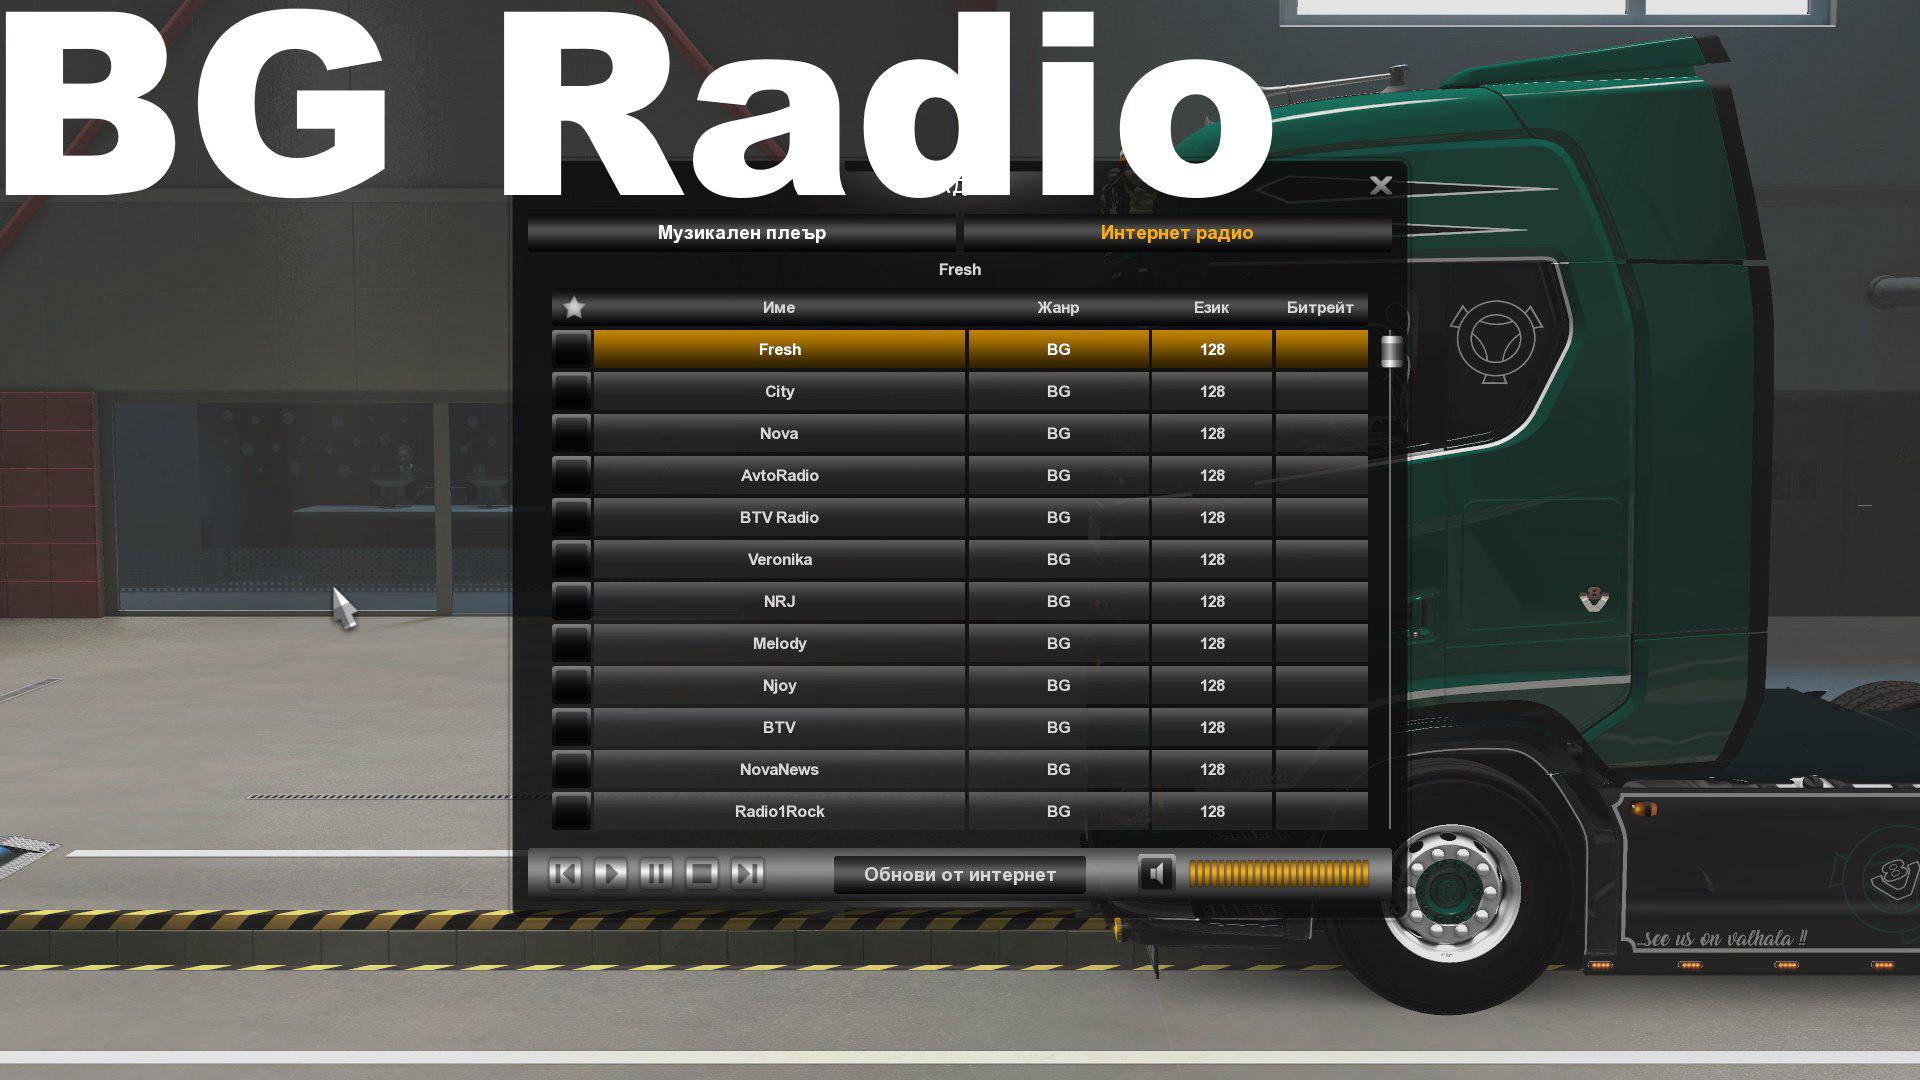 radio mods for euro truck simulator 2